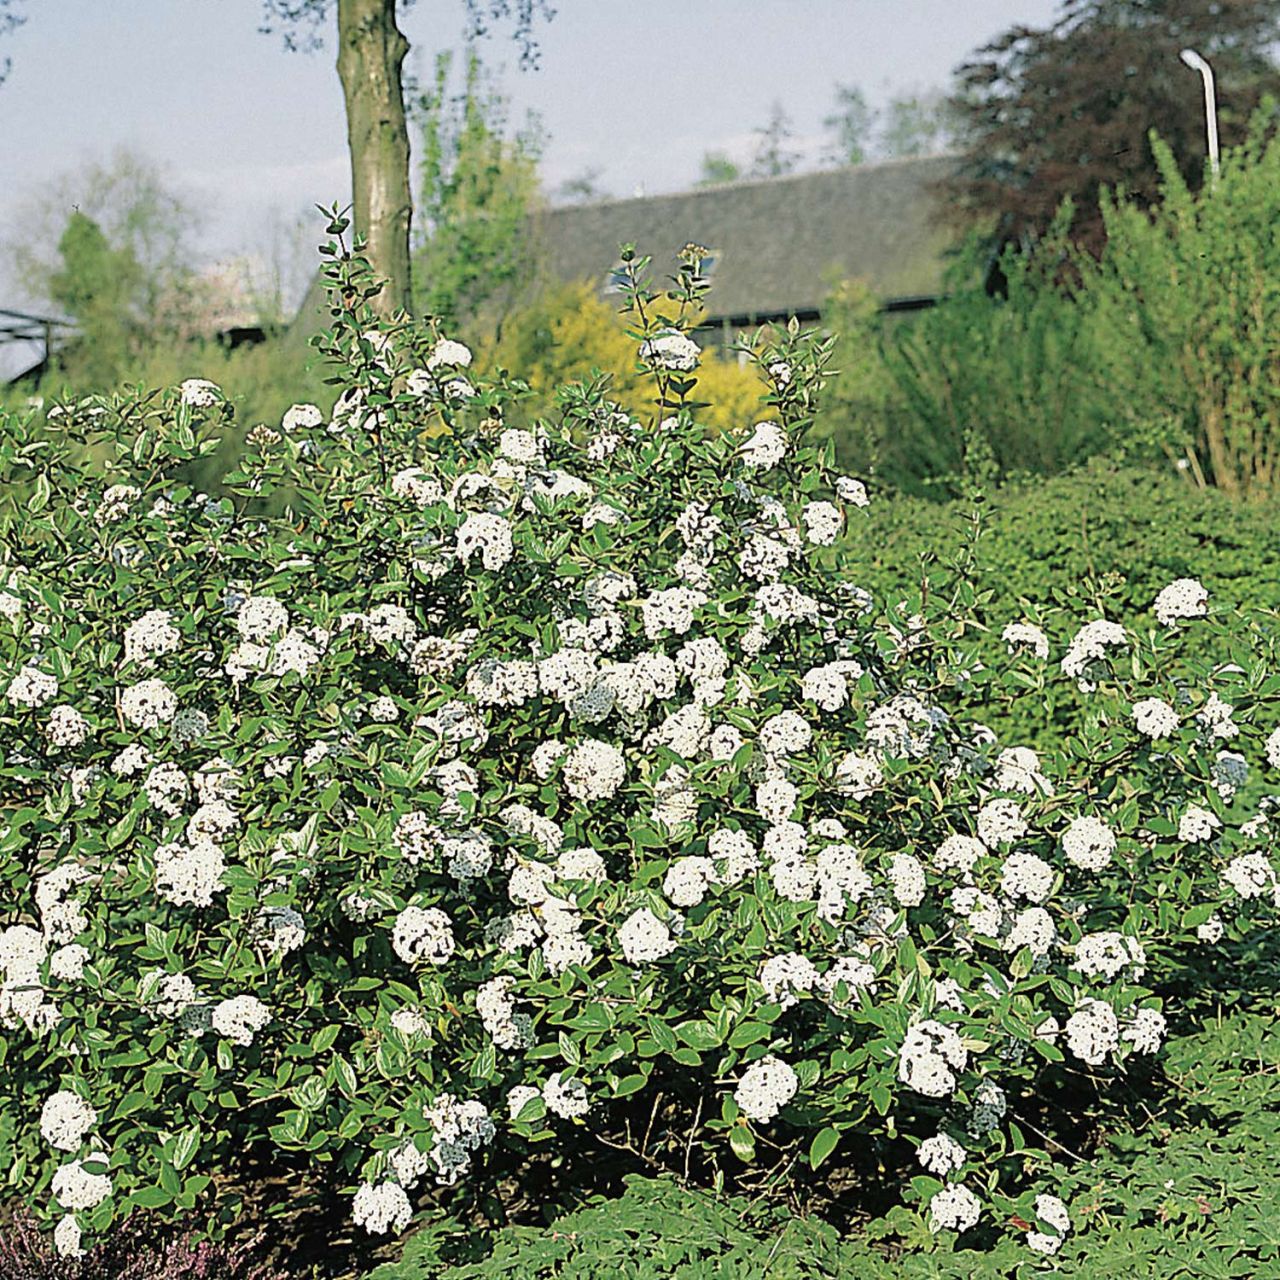 Kategorie <b>Blütensträucher und Ziergehölze </b> - Oster-Schneeball - Viburnum burkwoodii